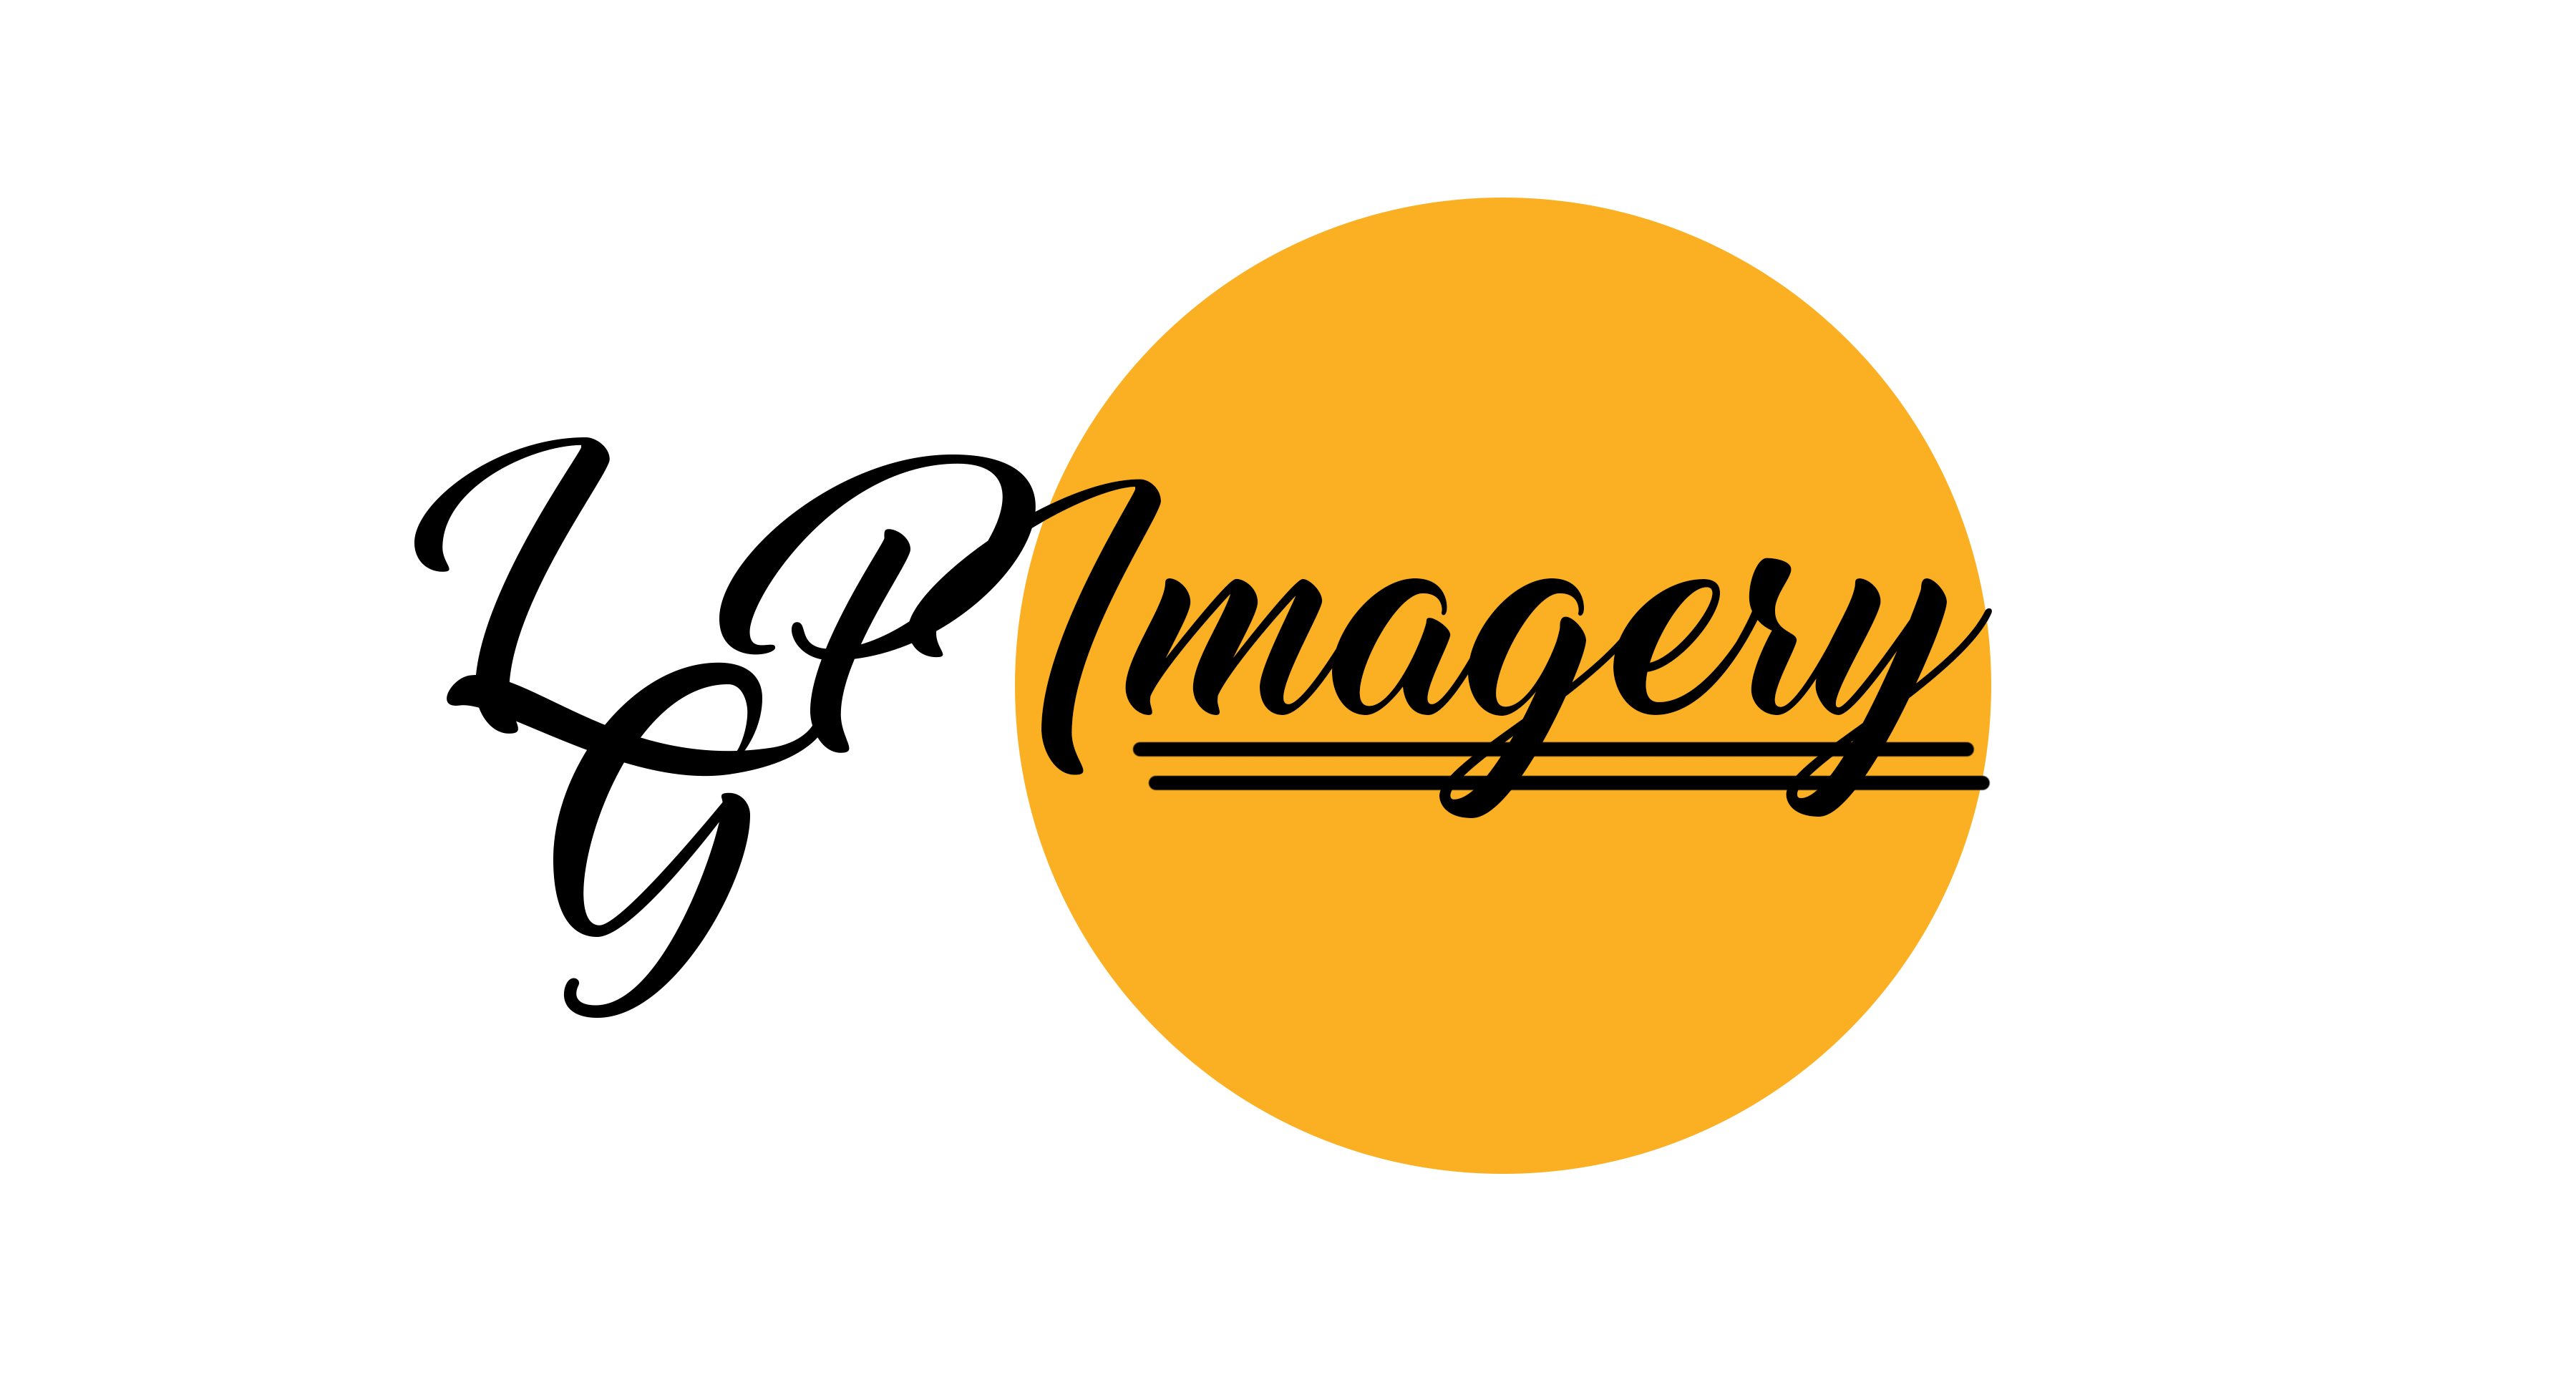 LGP Imagery - Artist Website